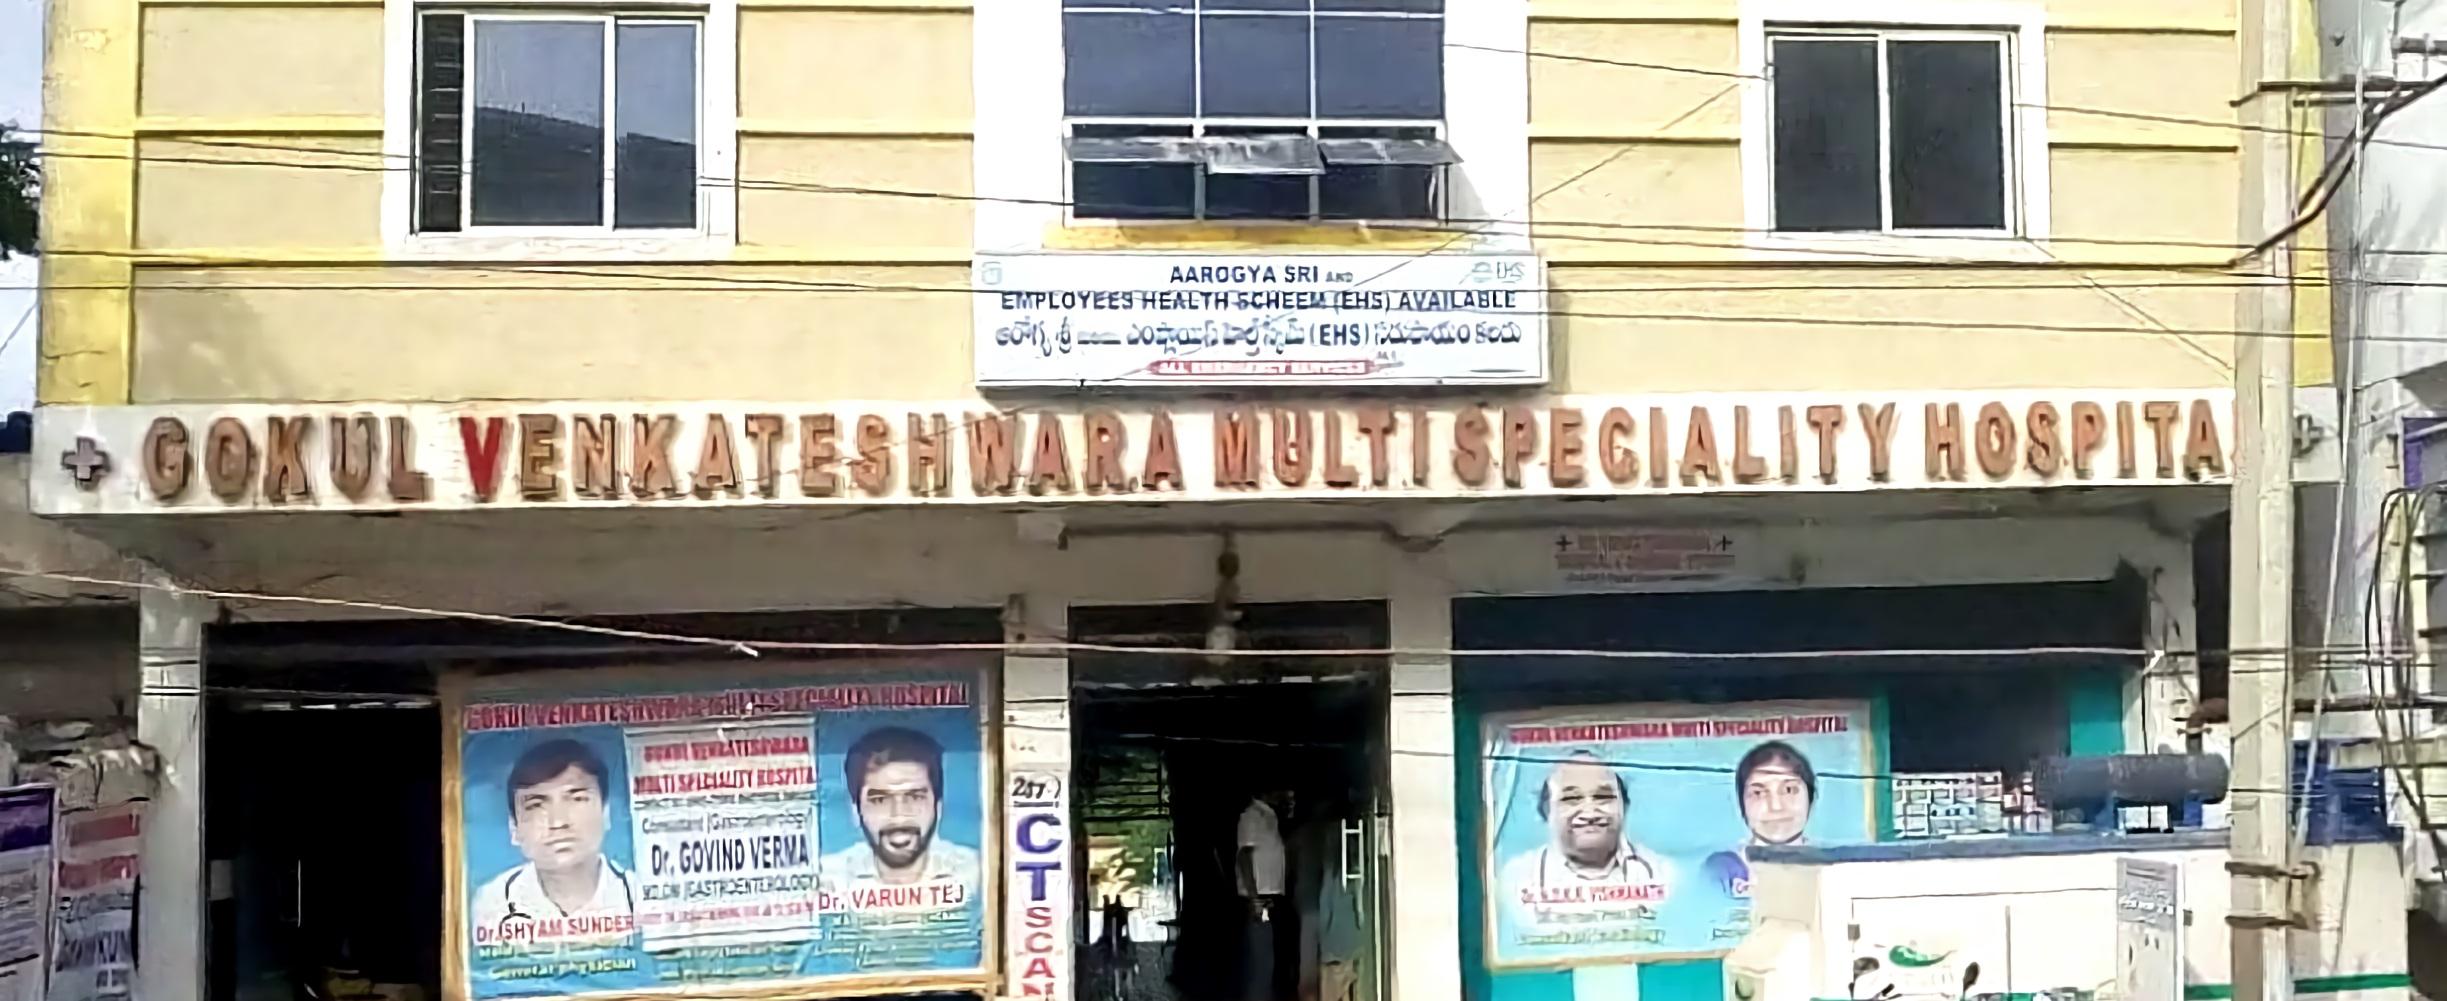 Gokul Venkateshwar Multi Speciality Hospital